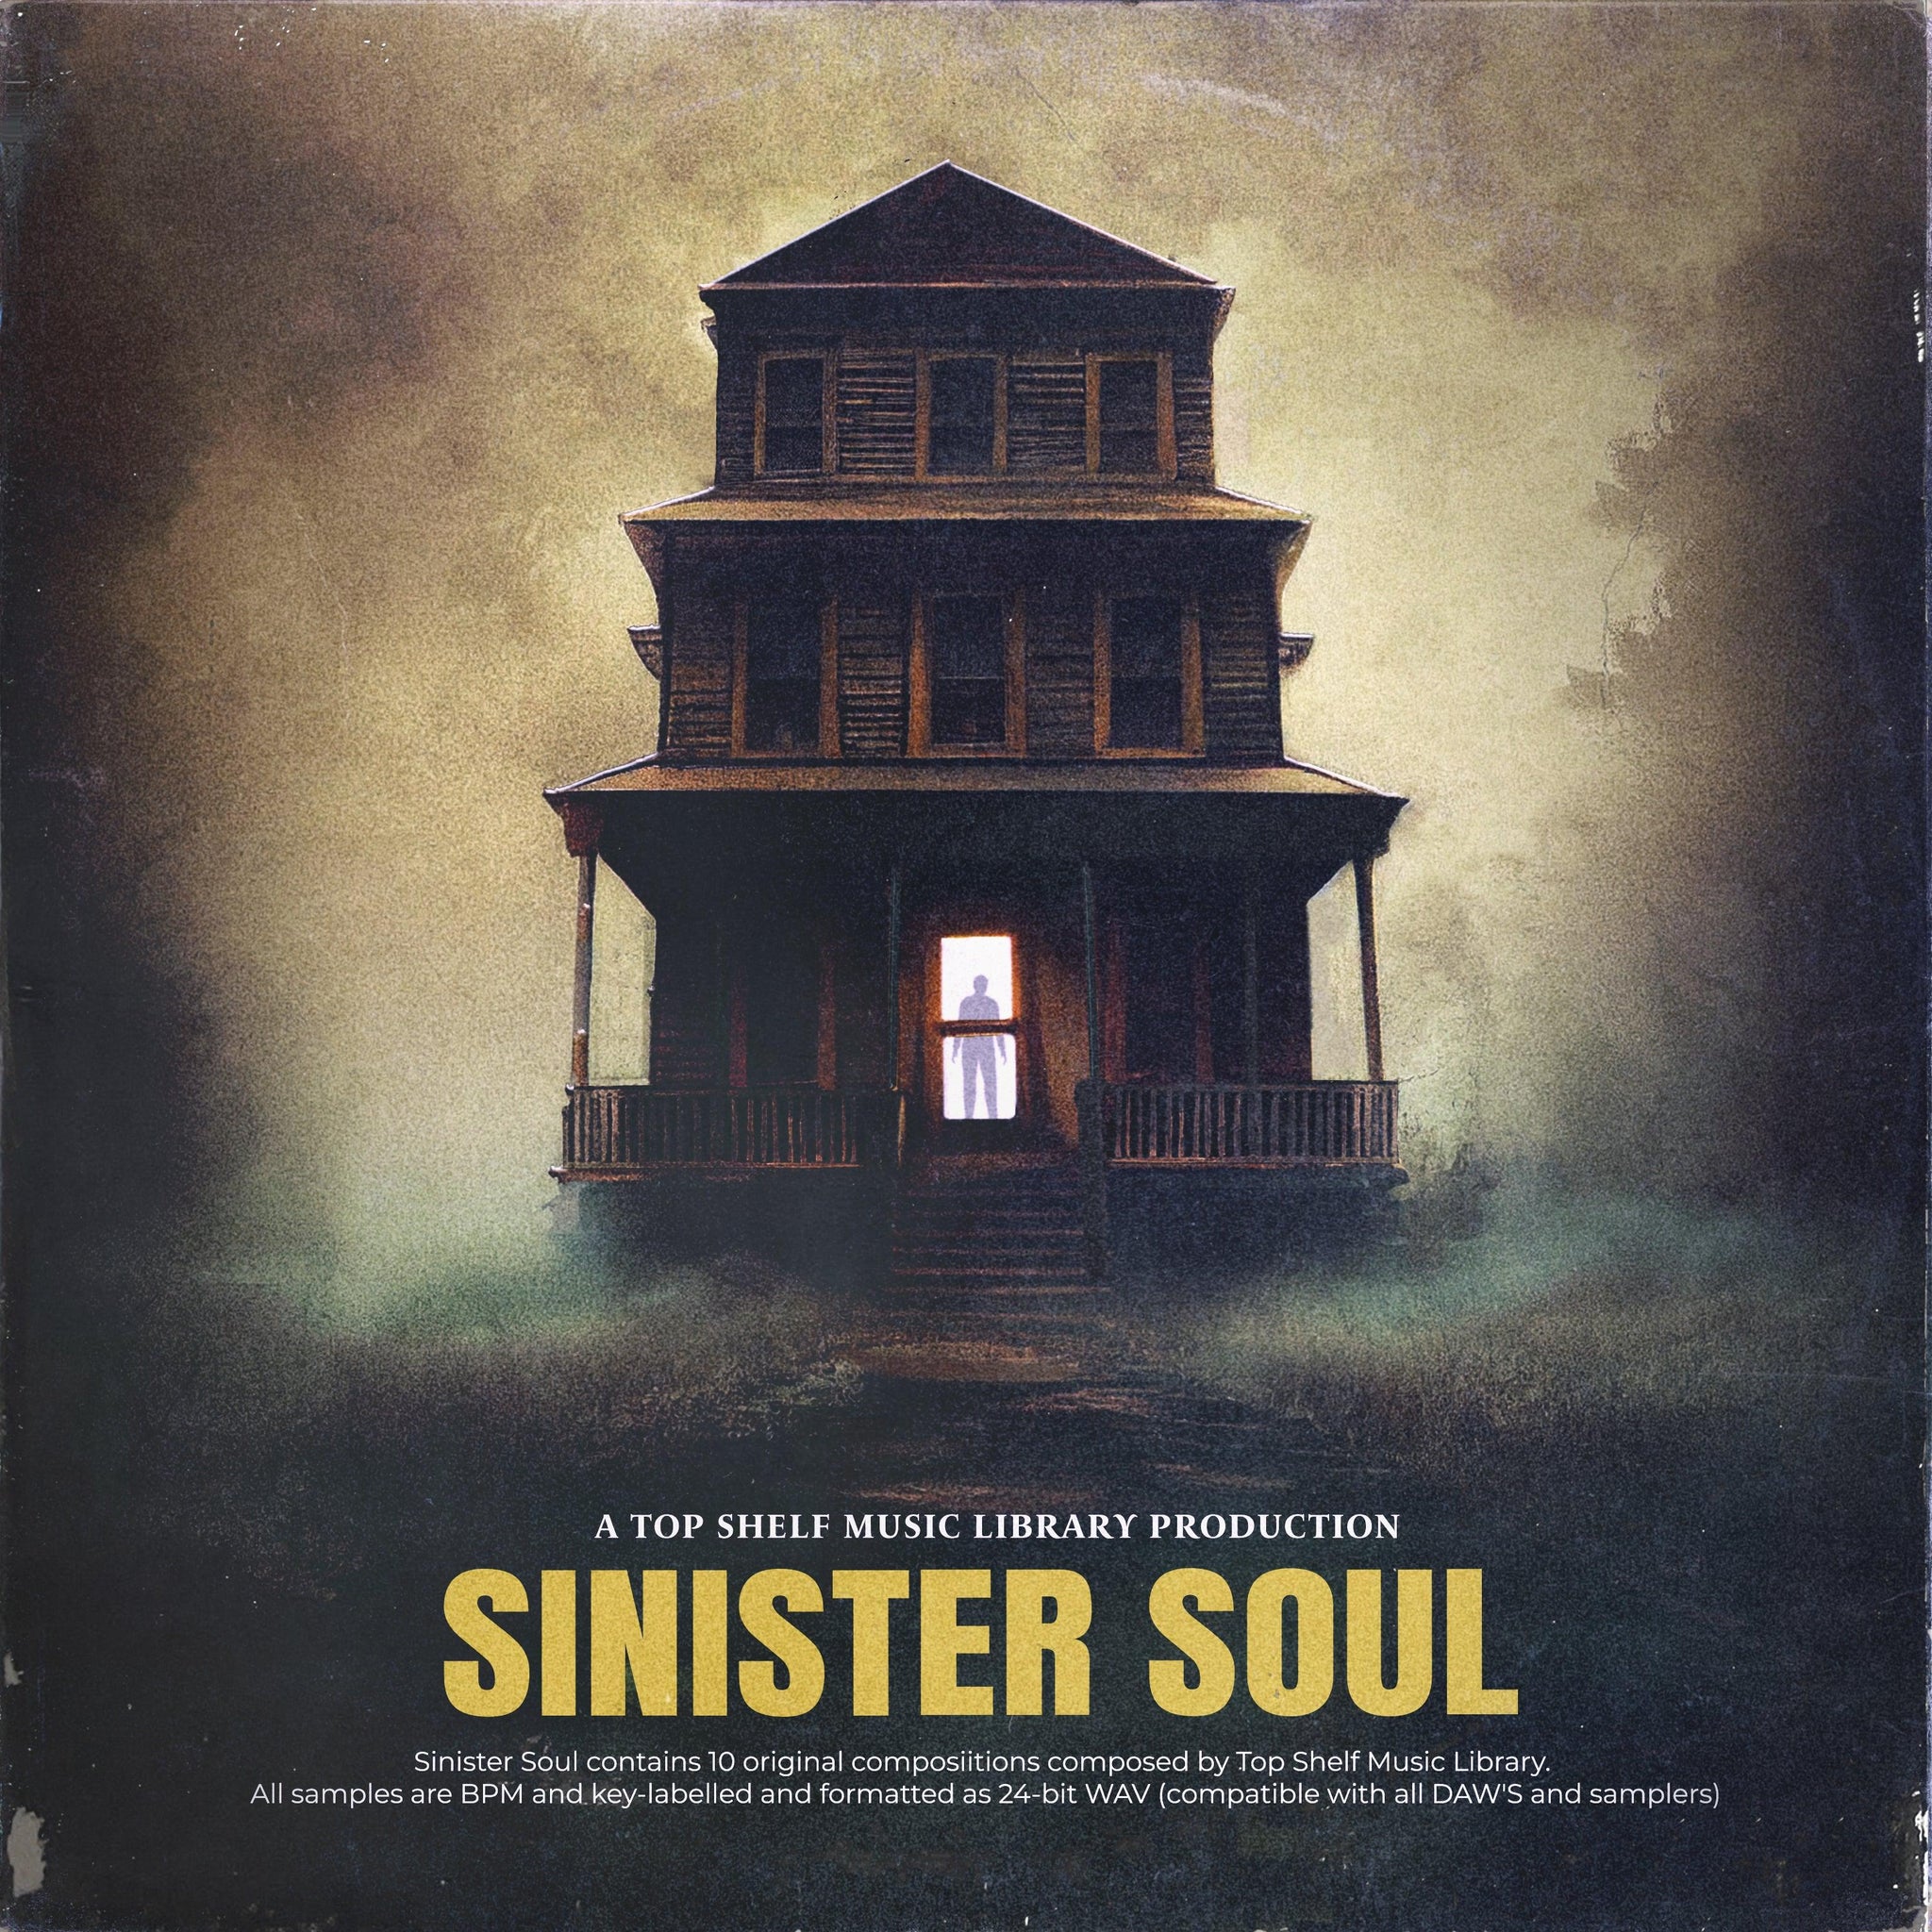 Sinister Soul - The Sample Lab